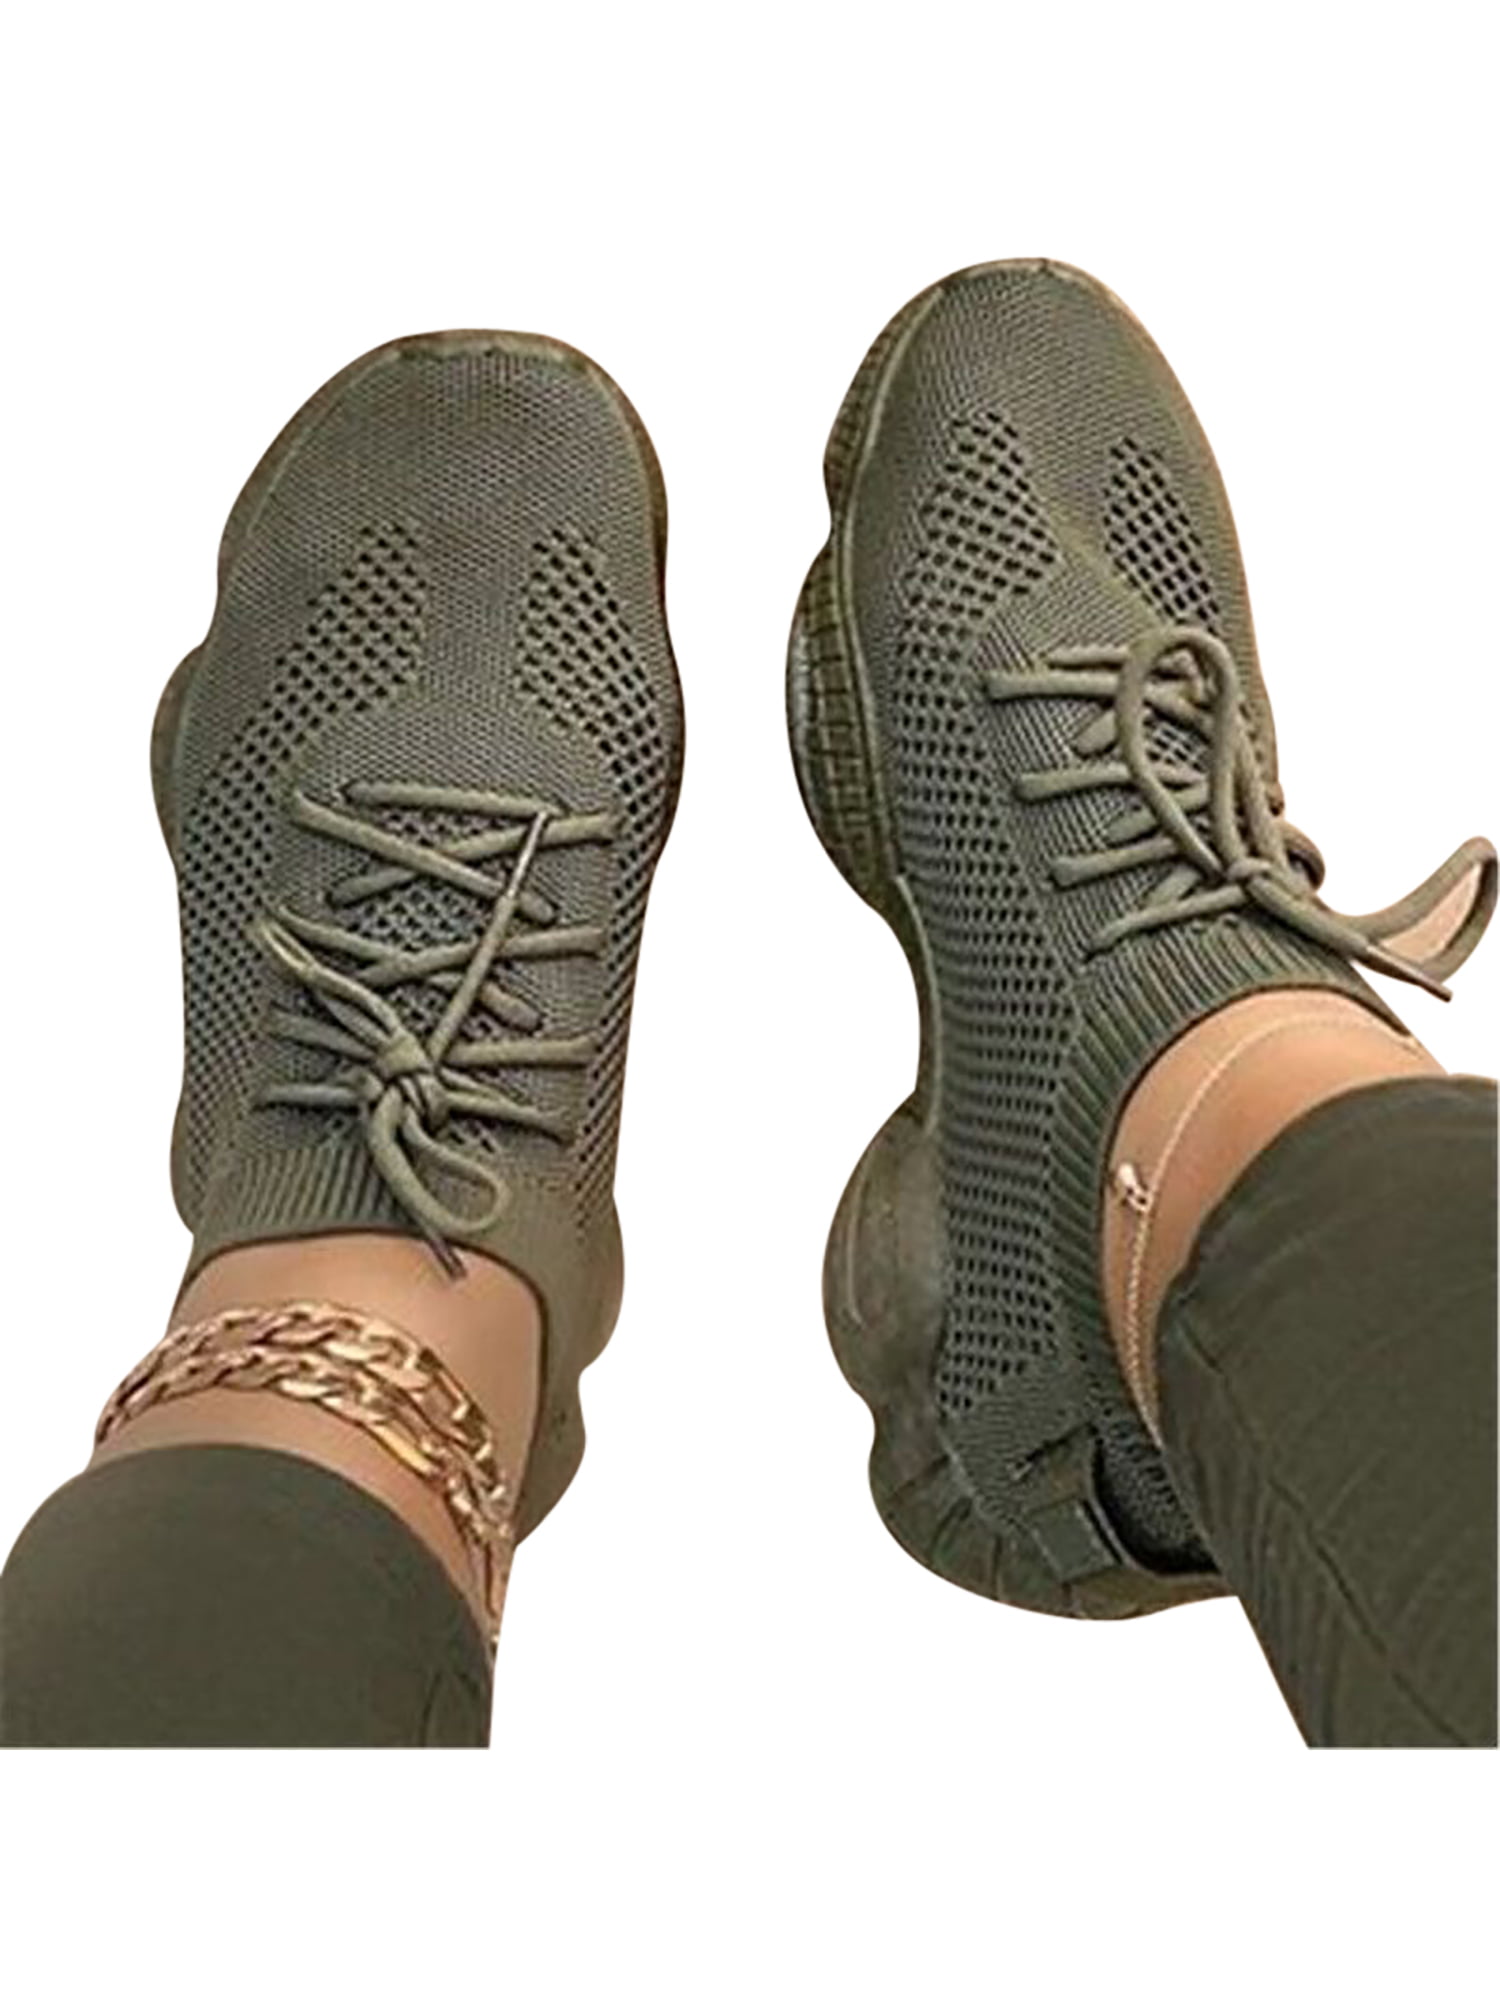 uubaris Women Trail Running Lightweight Mesh Tennis Sneaker Fashion Athletic Walking Shoes 